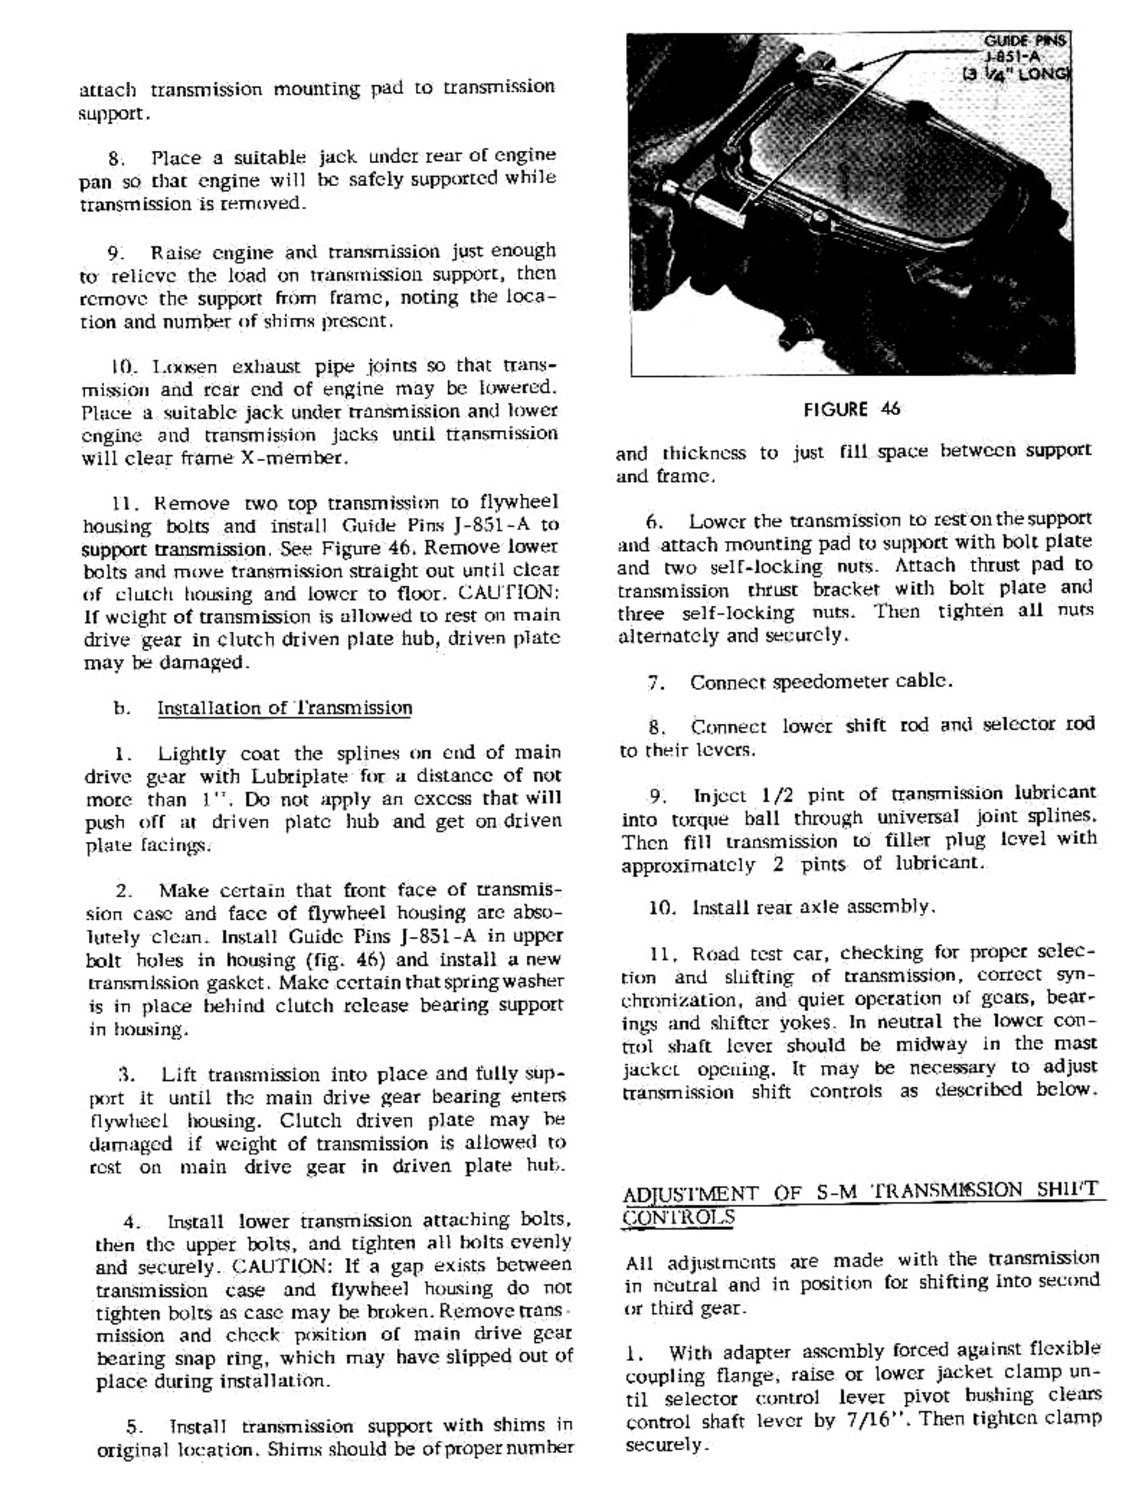 n_1957 Buick Product Service  Bulletins-051-051.jpg